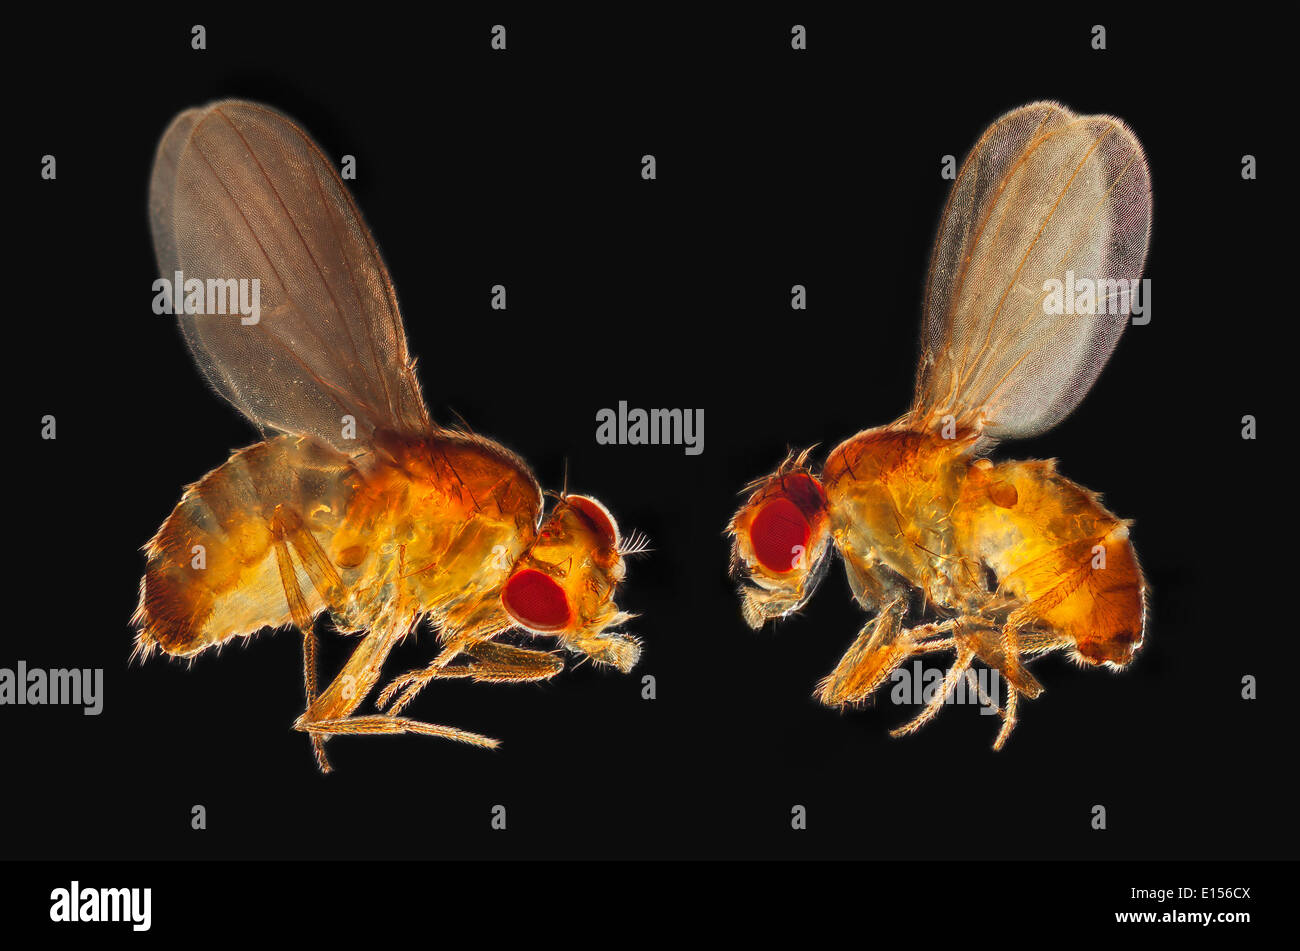 Les mouches à fruits darkfield photomicrographie Banque D'Images